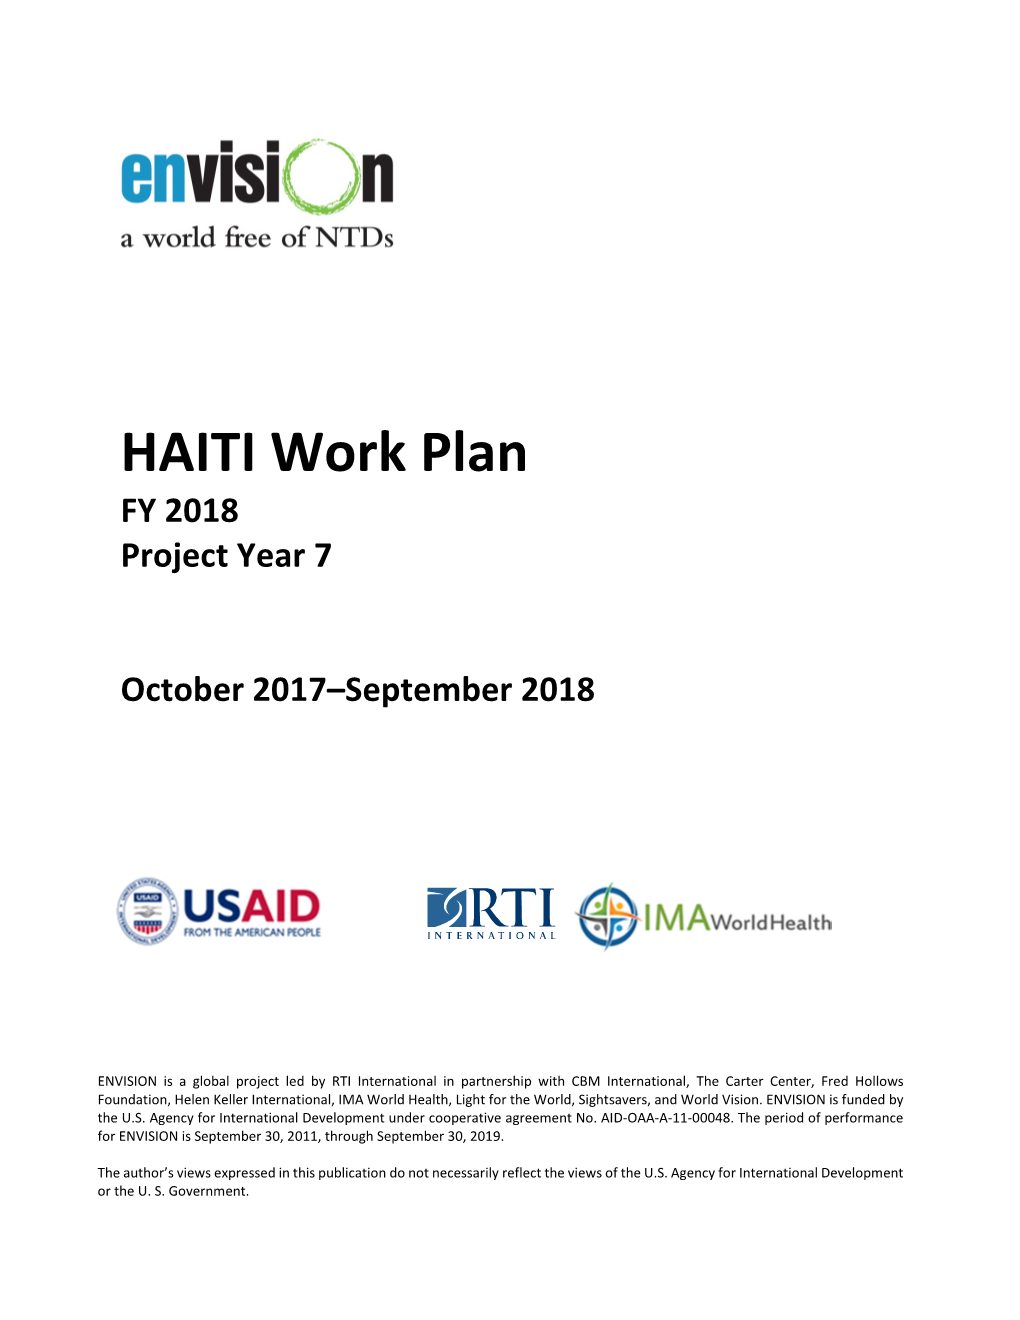 HAITI Work Plan FY 2018 Project Year 7